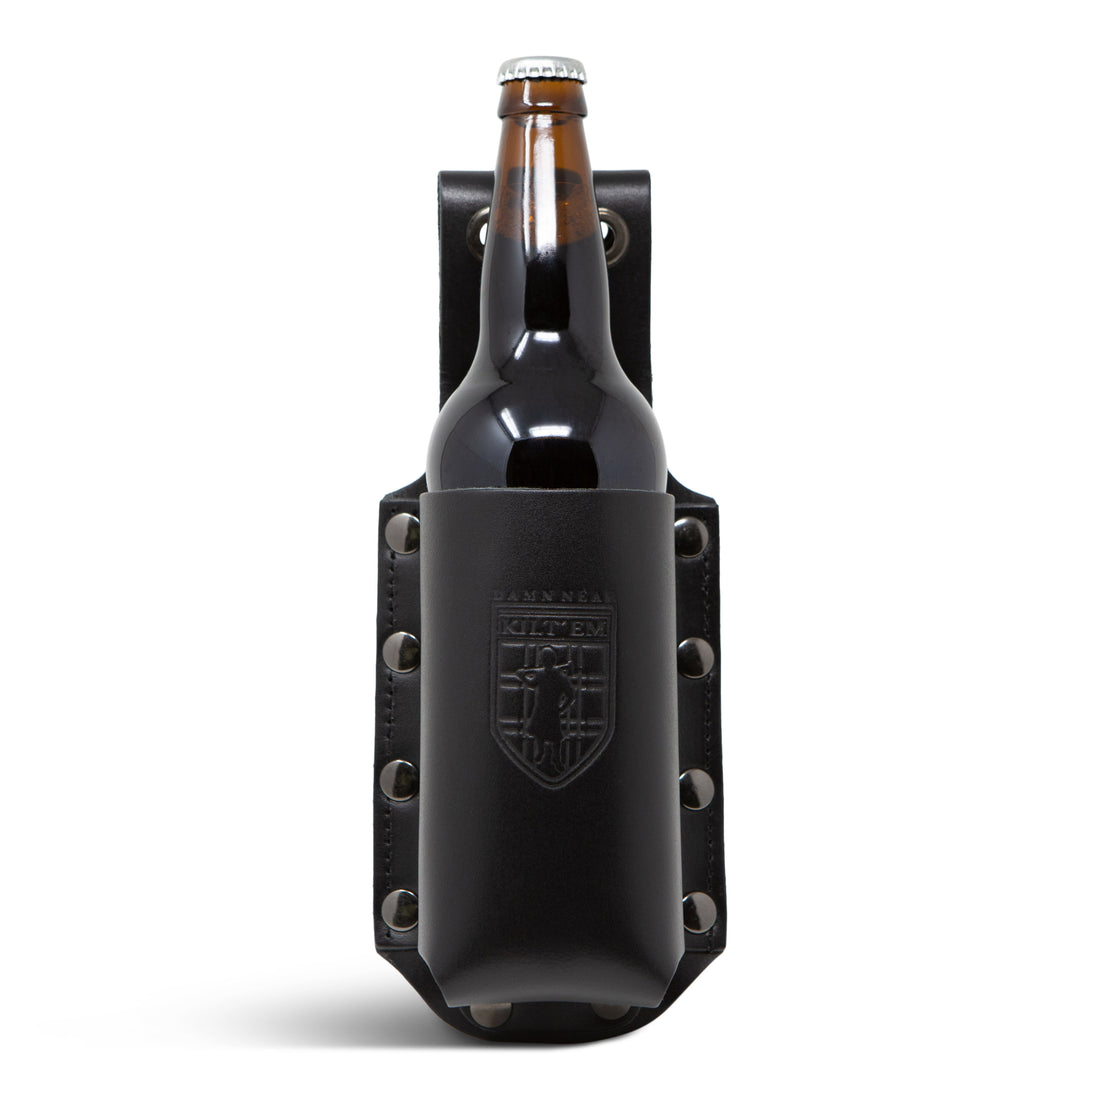 22 oz Bomber XL Bottle Holder - Black Leather Preview #2